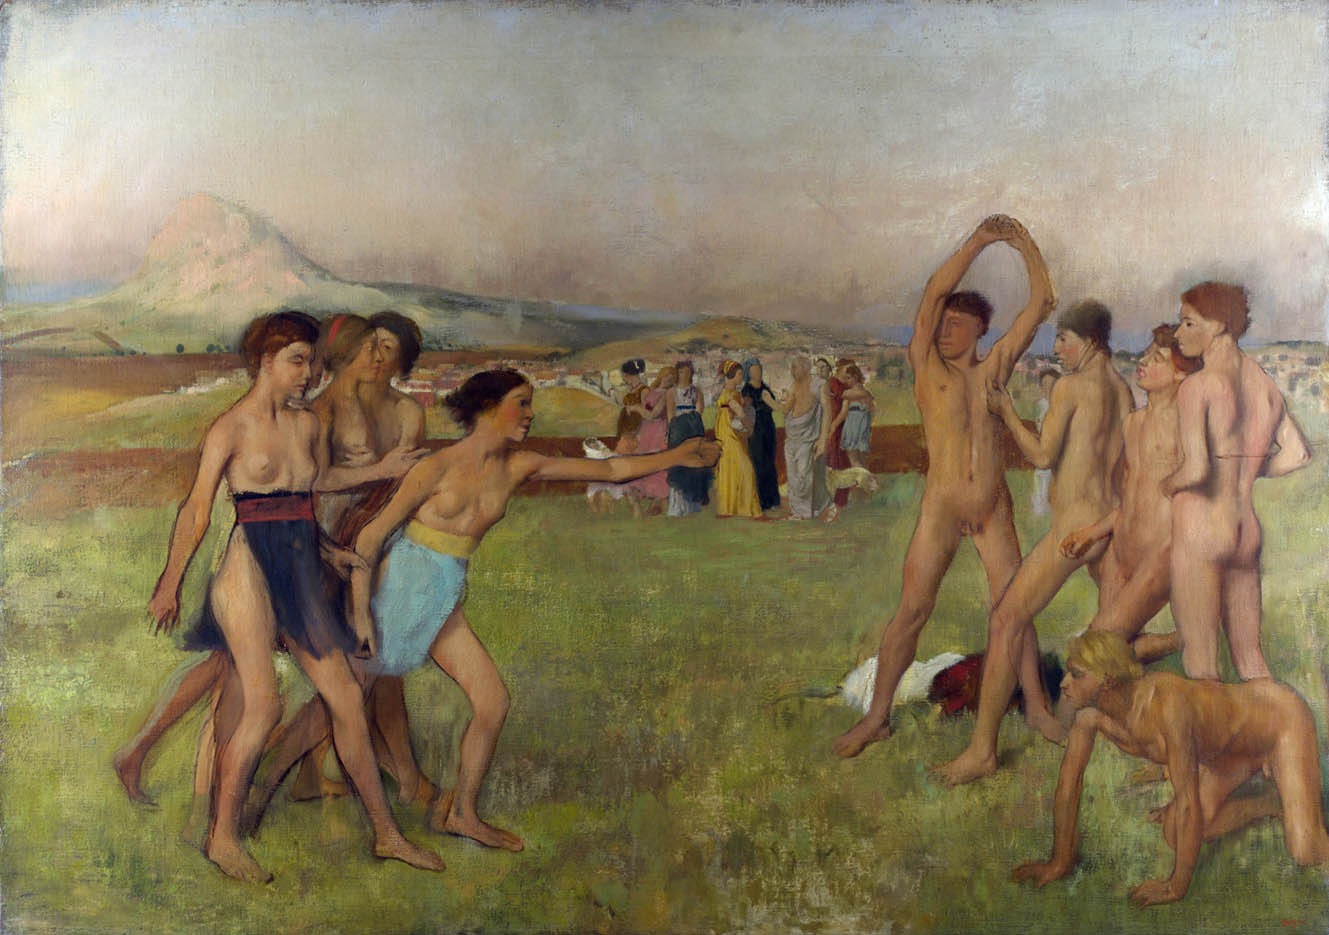 Эдгар Дега (Edgar Degas), “Упражнения юных спартанцев“